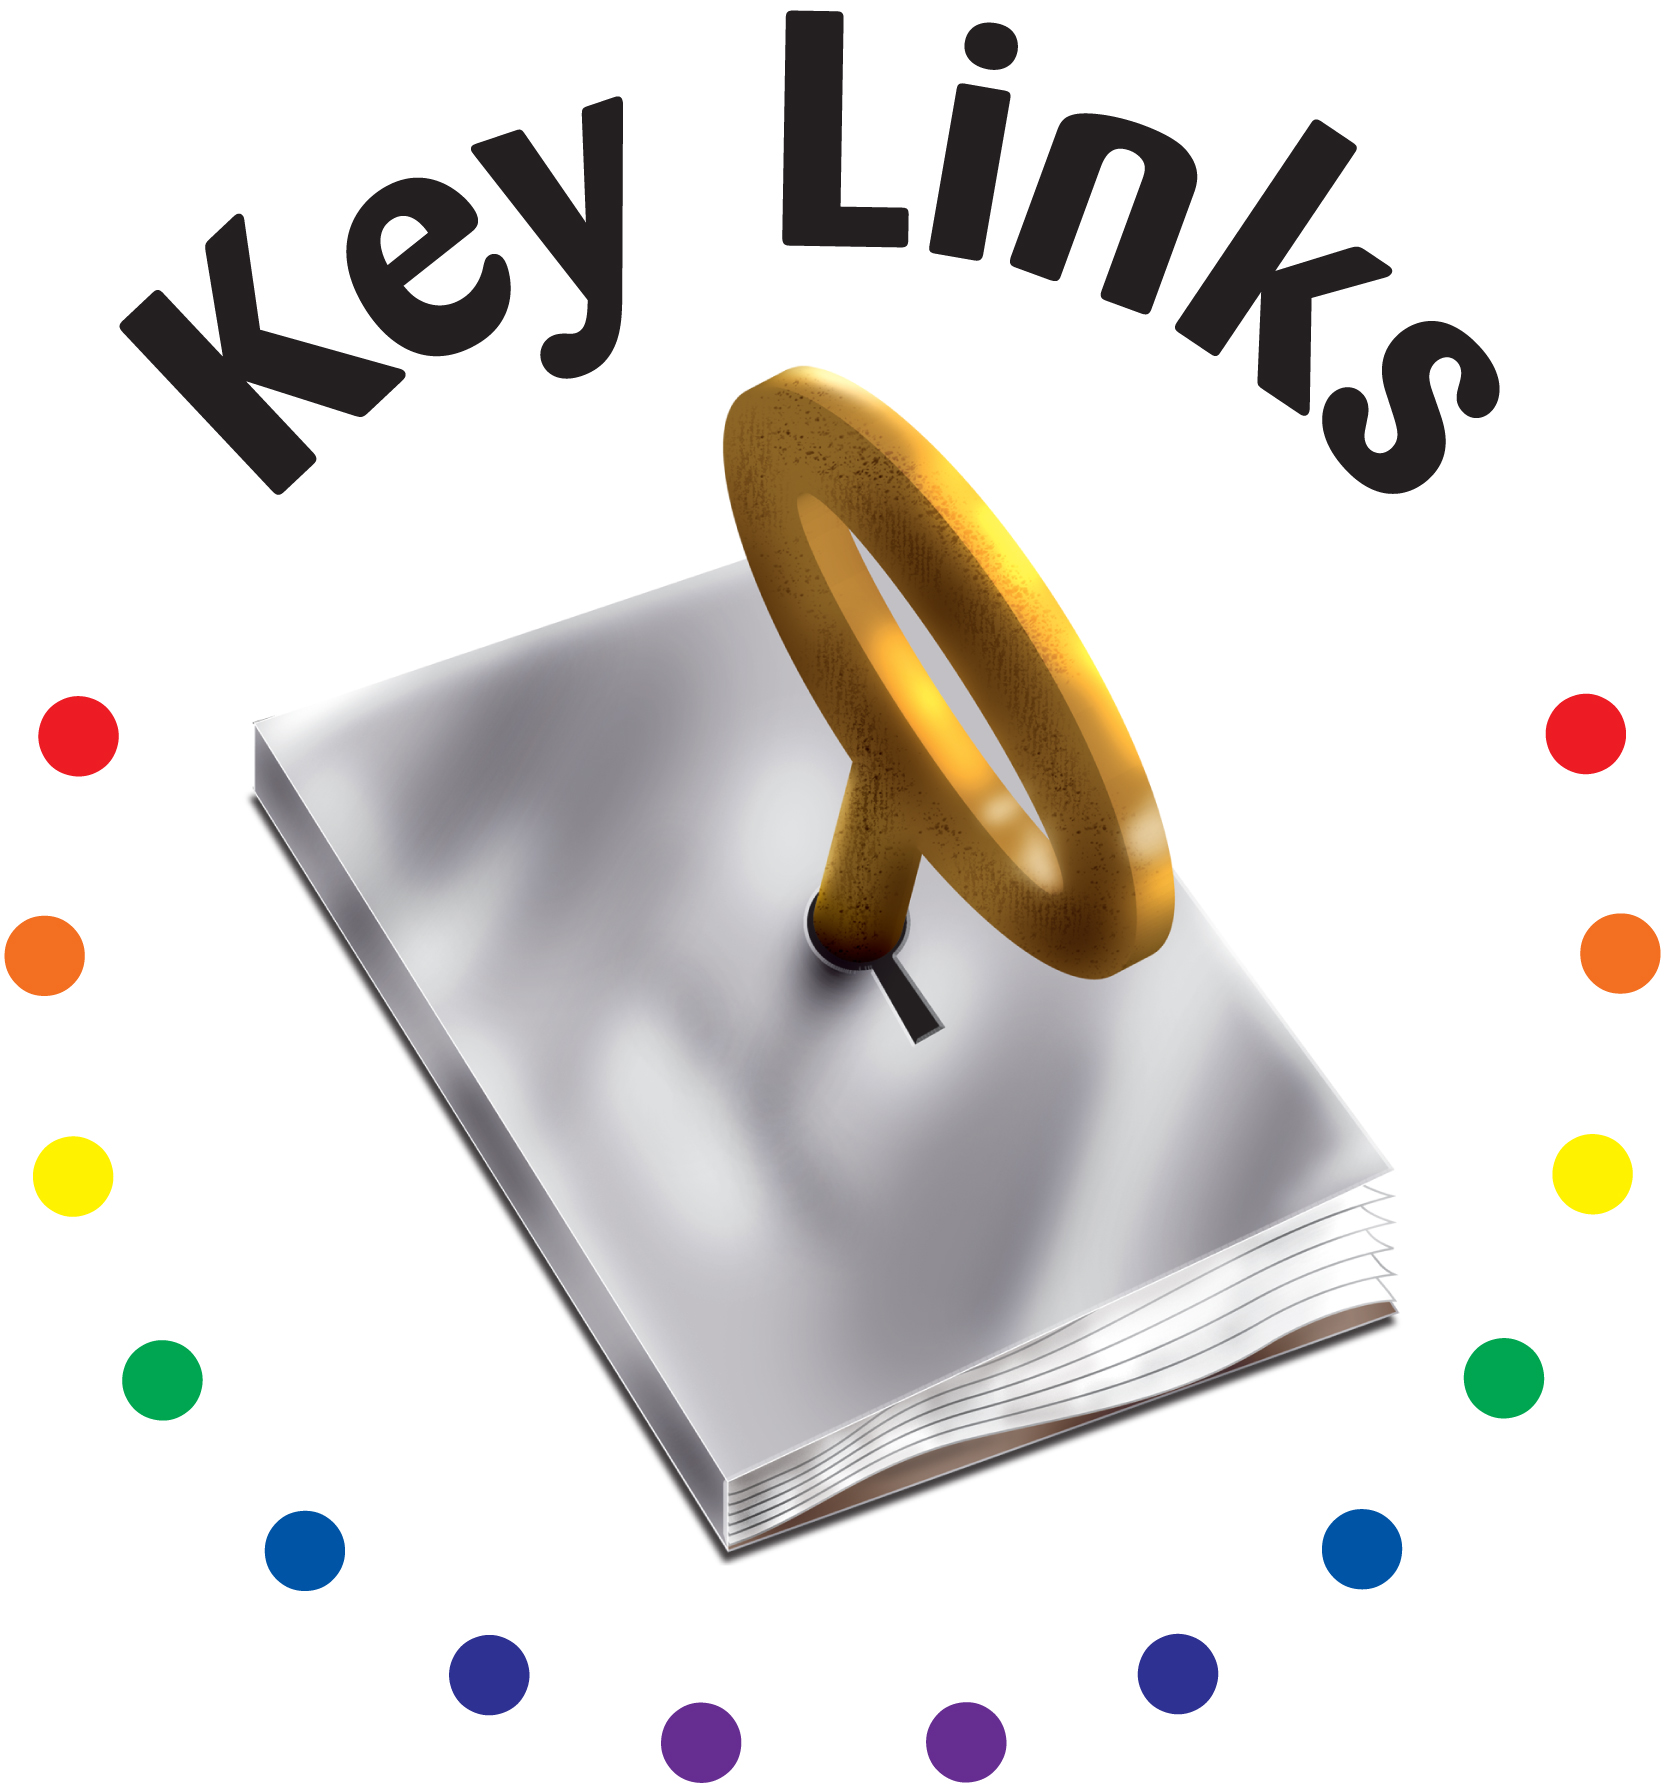 Key Links Benchmark box 